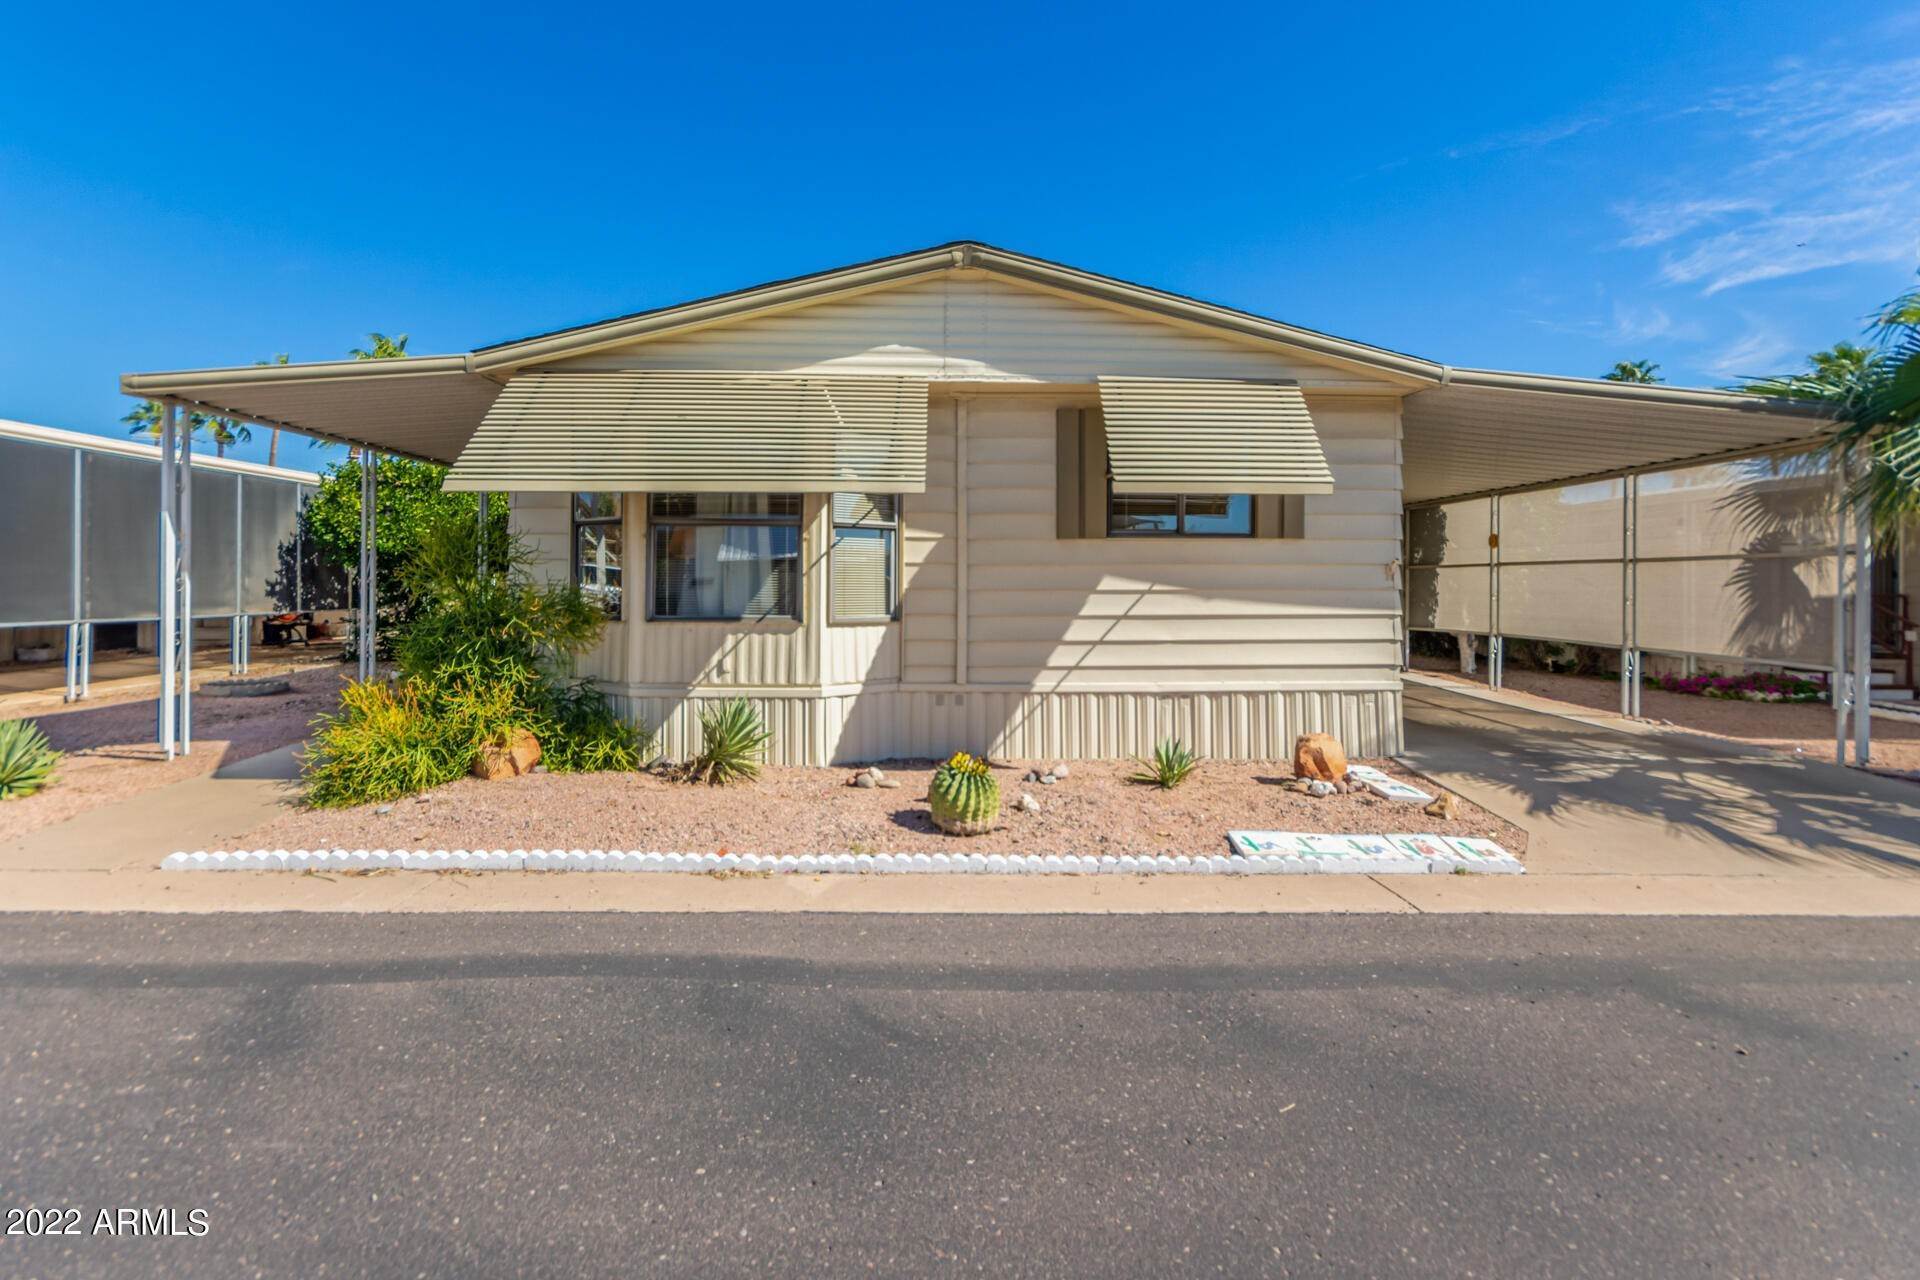 1. Mobile Home for Sale at Mesa, AZ 85207